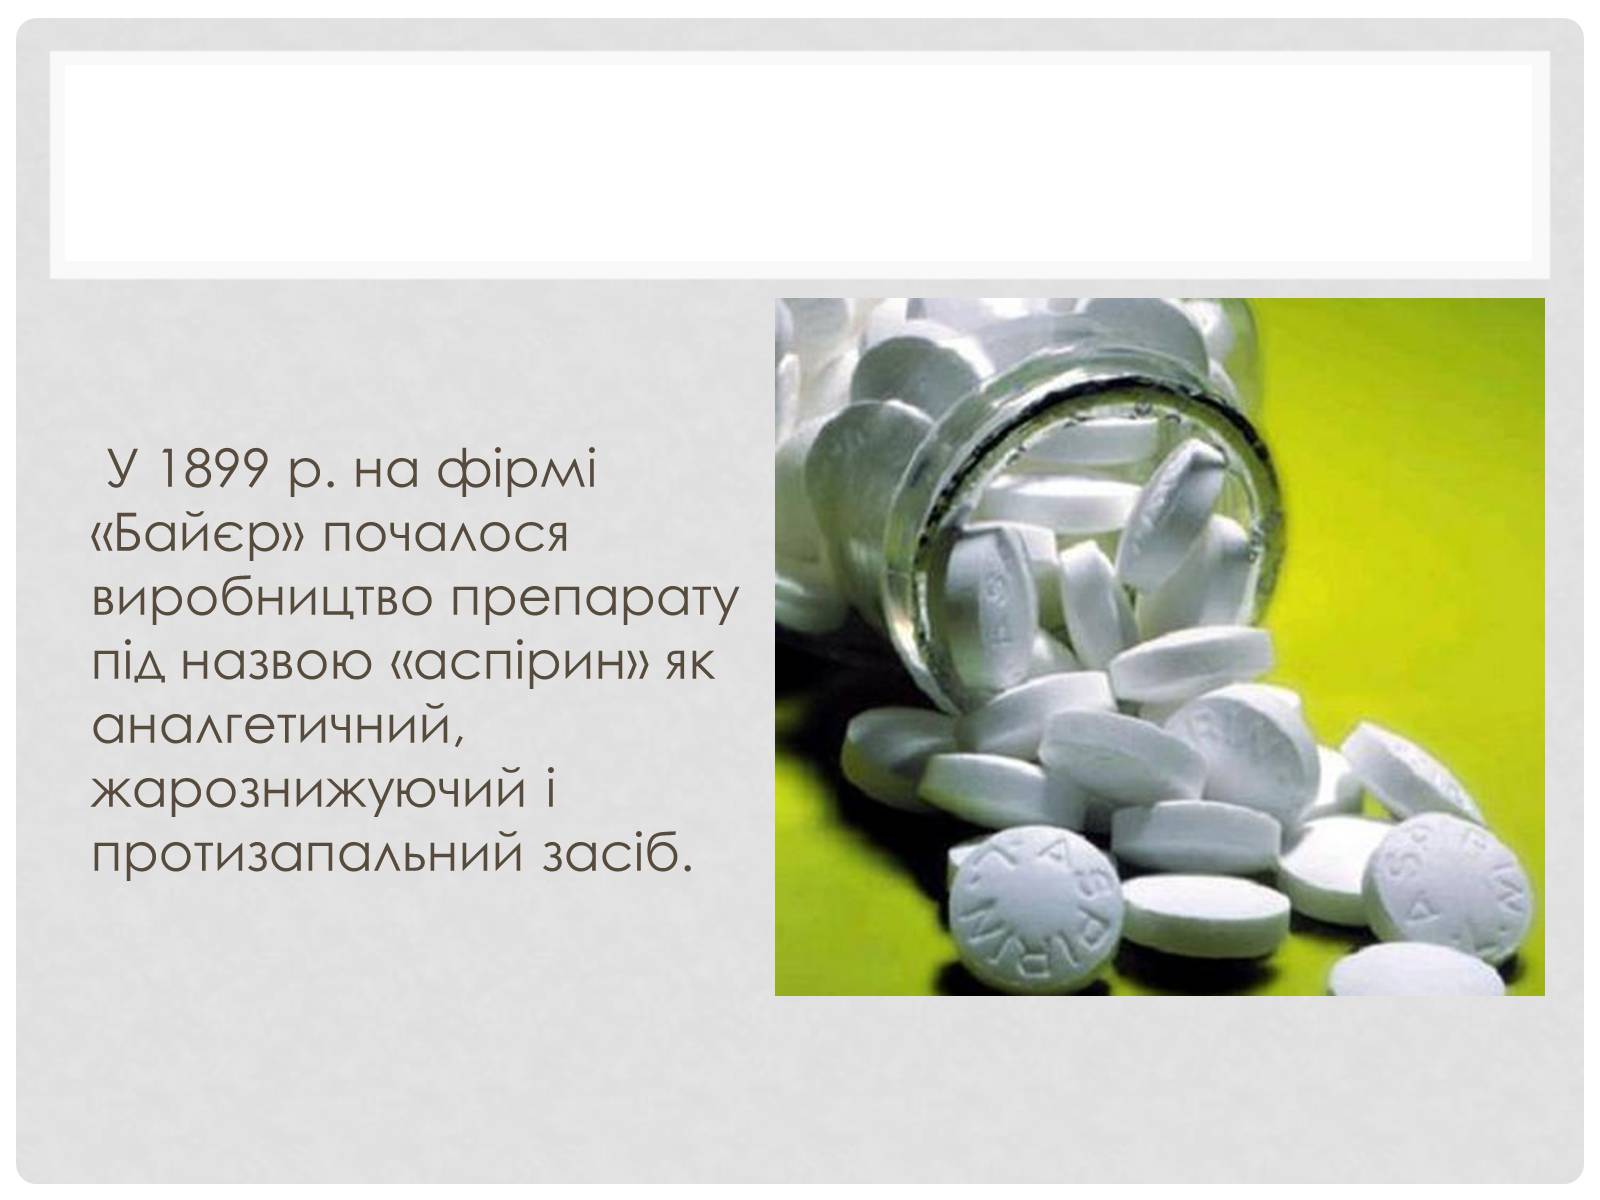 Презентація на тему «Синтетические лекарственные препараты» (варіант 2) - Слайд #5